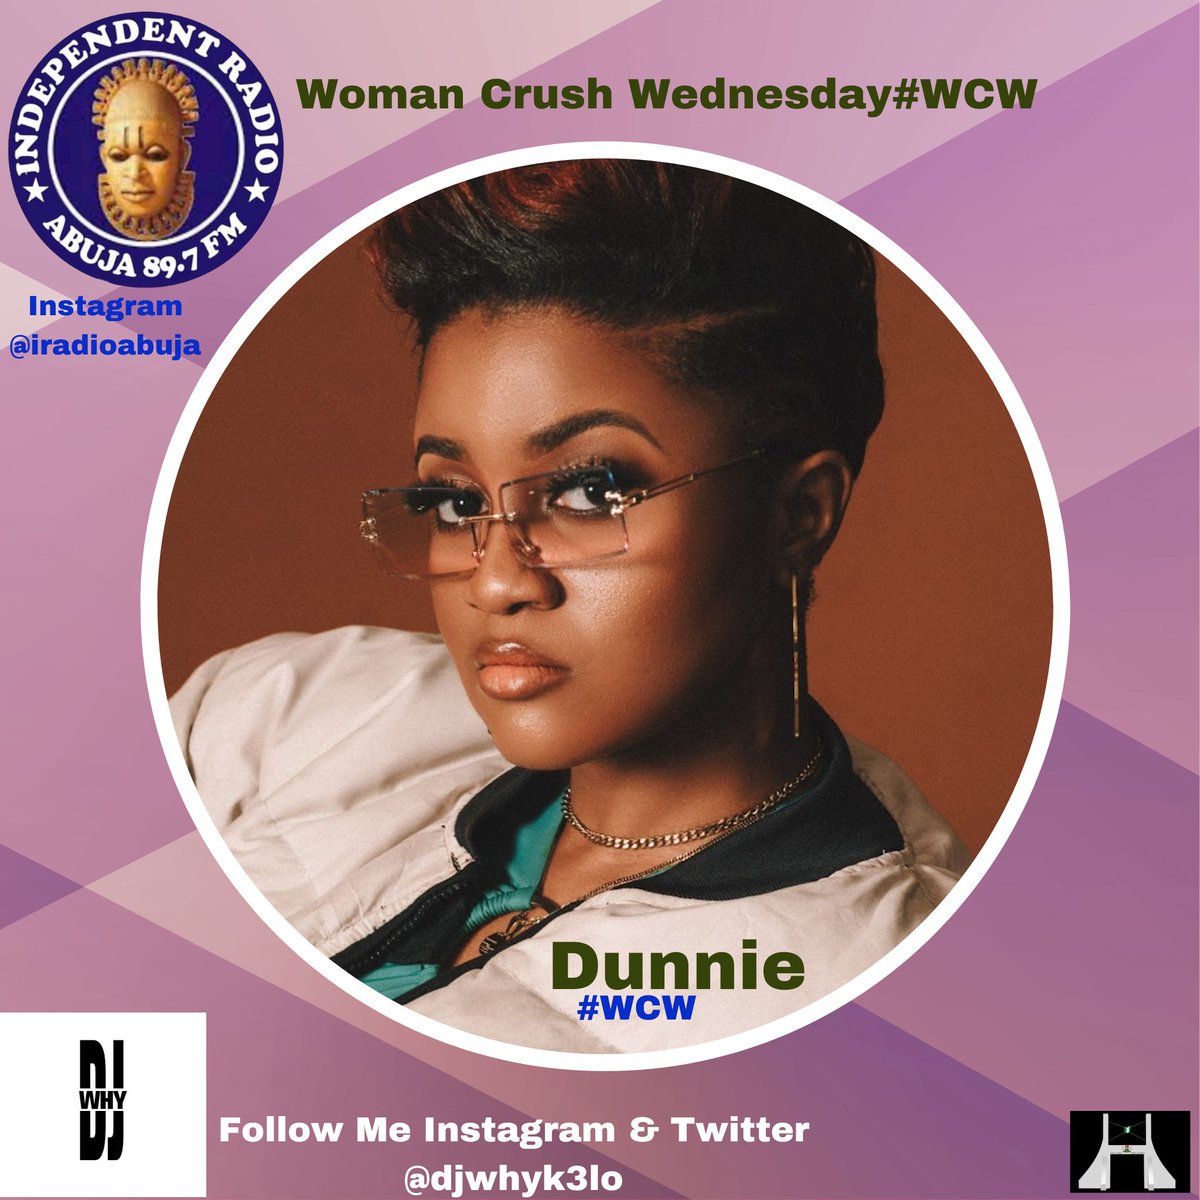 Woman Crush Wednesday
@OfficialDunnie 

#WCW #WomanCrushWednesday #womancrush #AbujaTwitterCommunity #Abuja